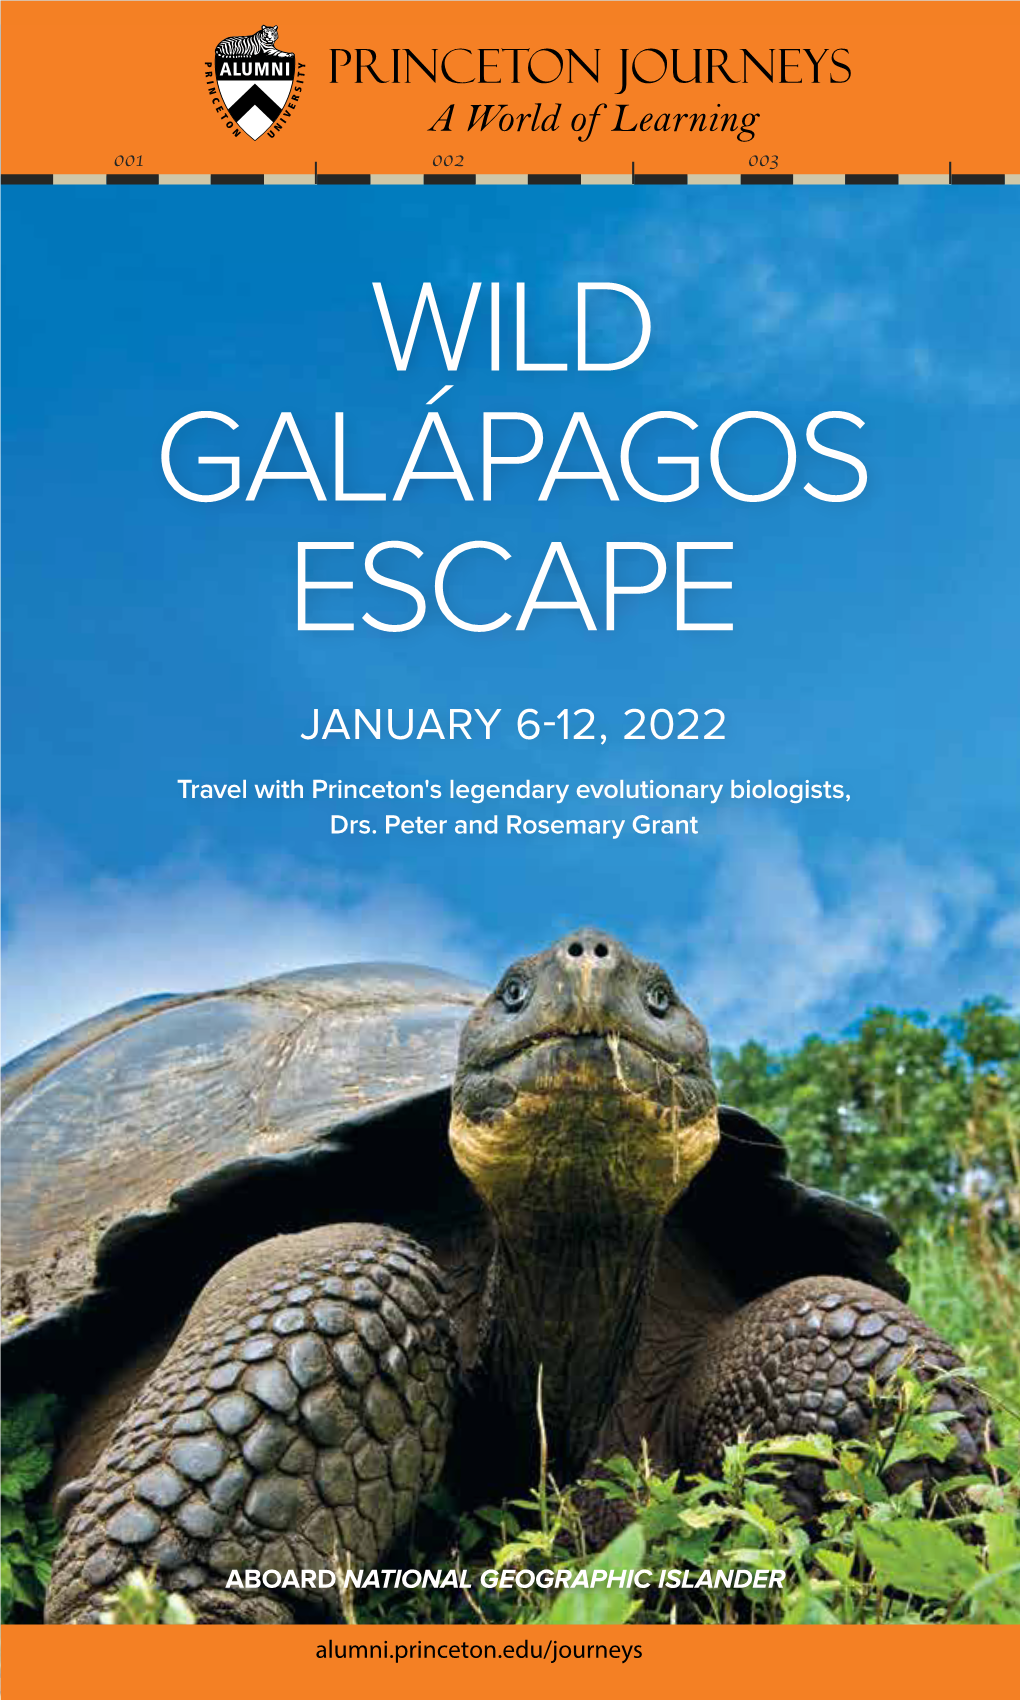 Wild Galápagos Escape January 6-12, 2022